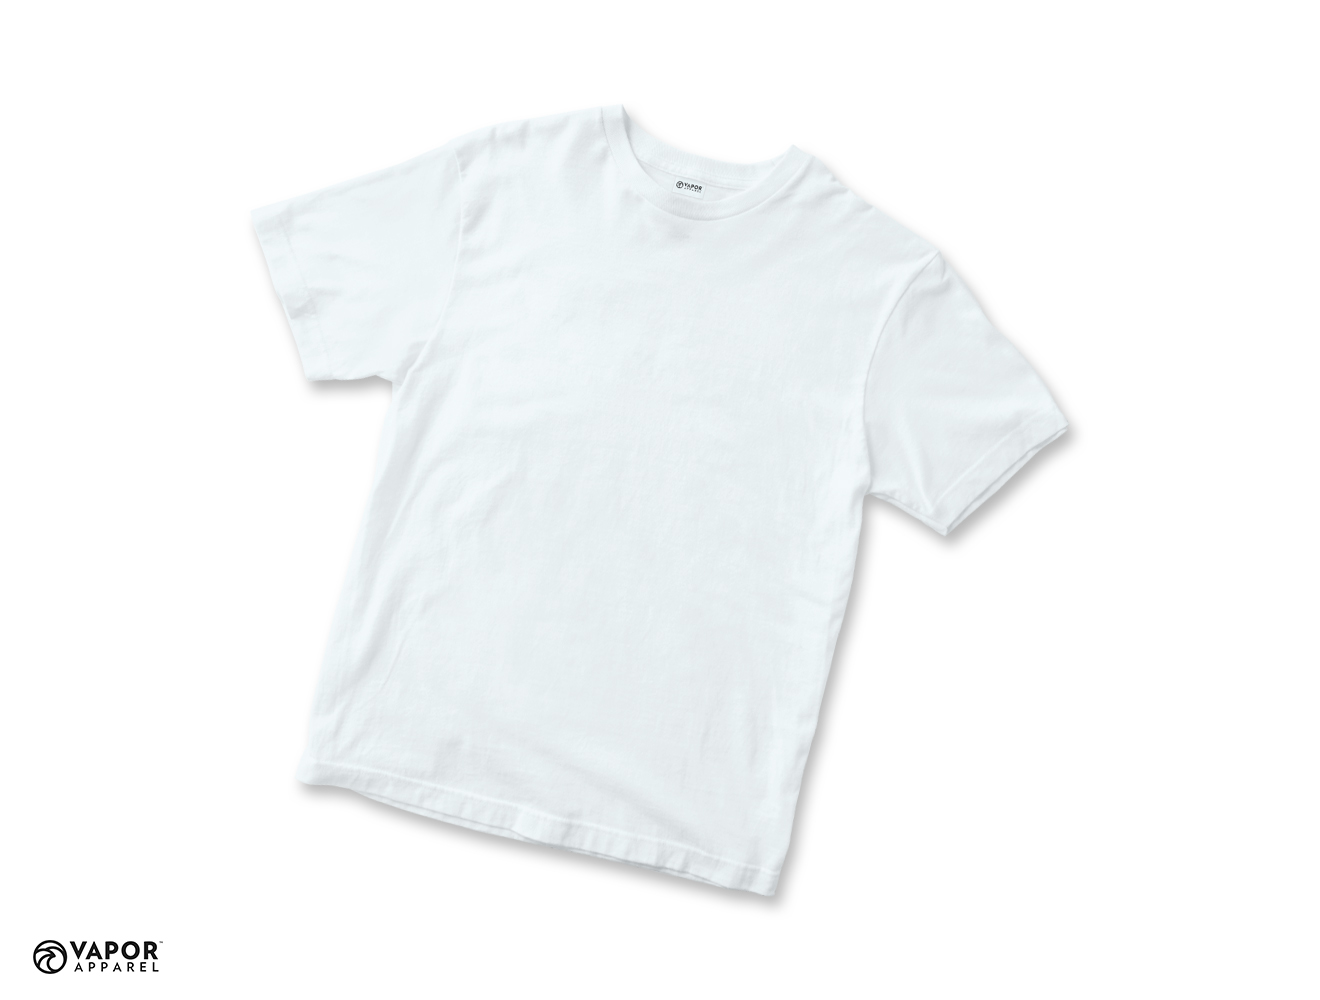 Vapor Sublimation T-Shirt for Adults size XL - White